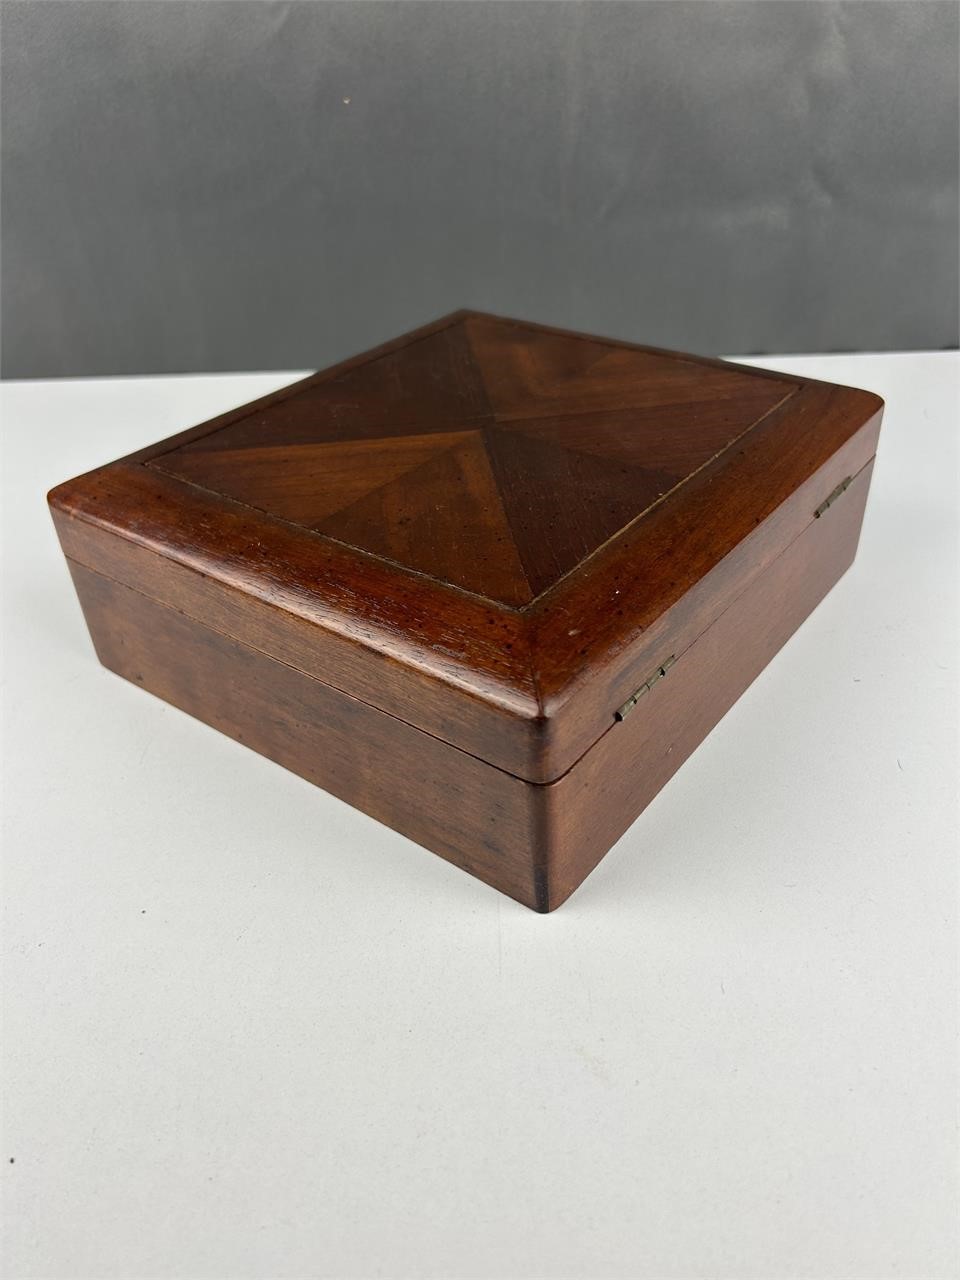 Vintage wooden jewelry box